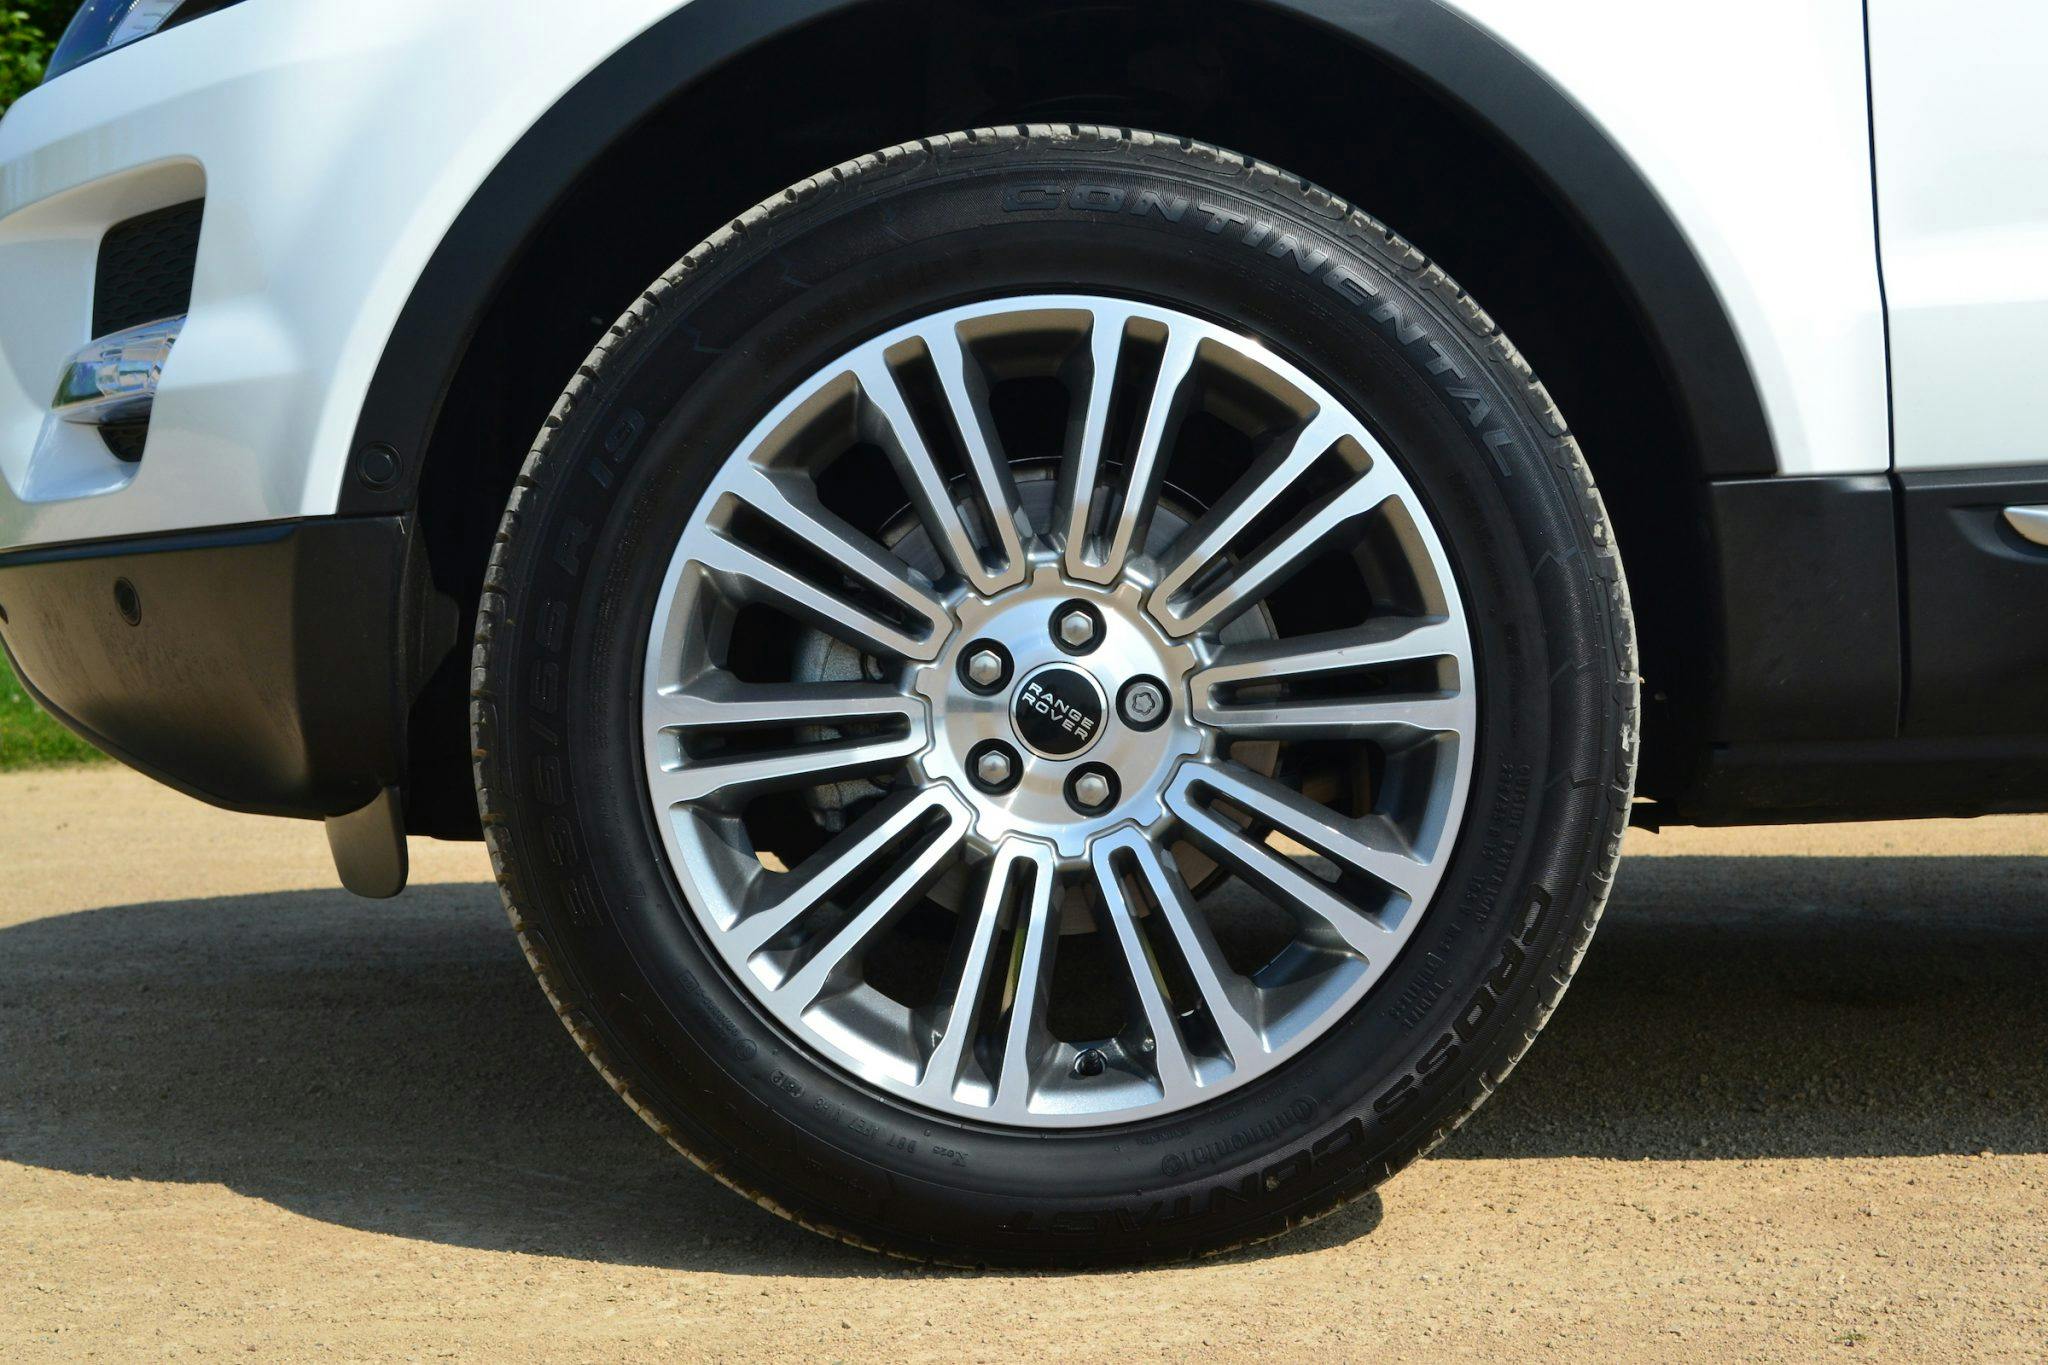 Range Rover Evoque wheel tire